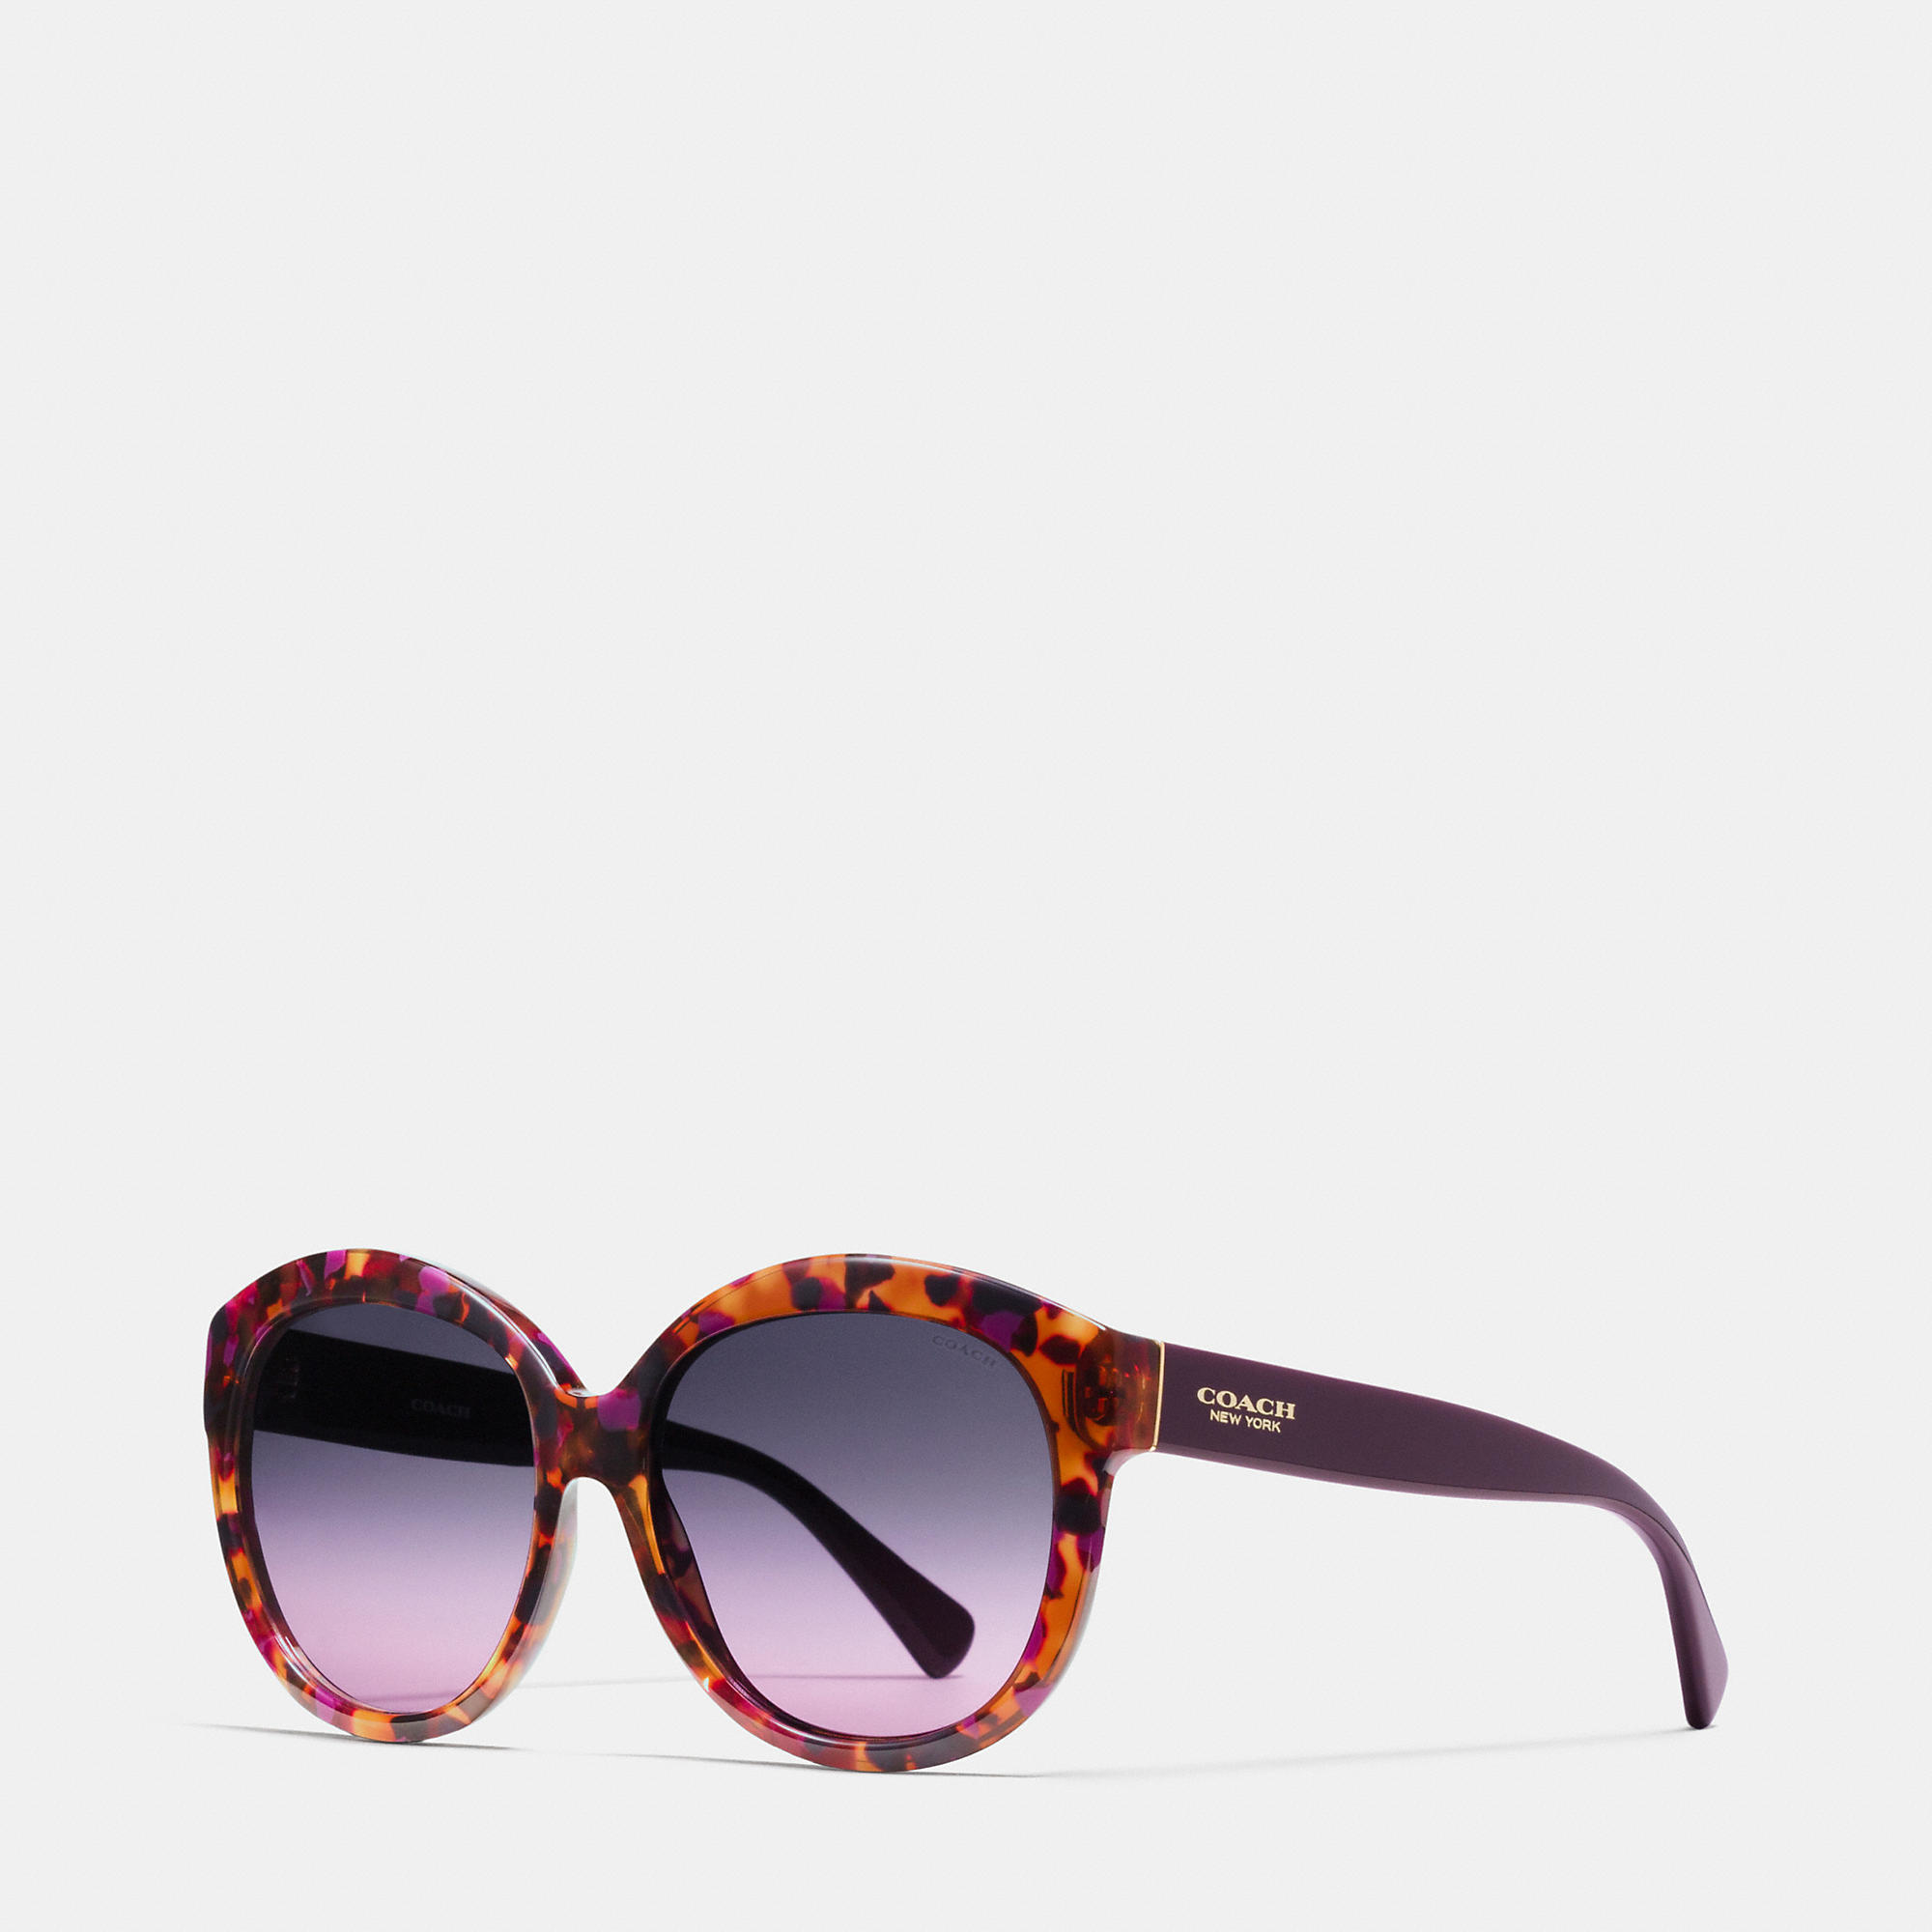 COACH Legacy Sunglasses in Purple - Lyst